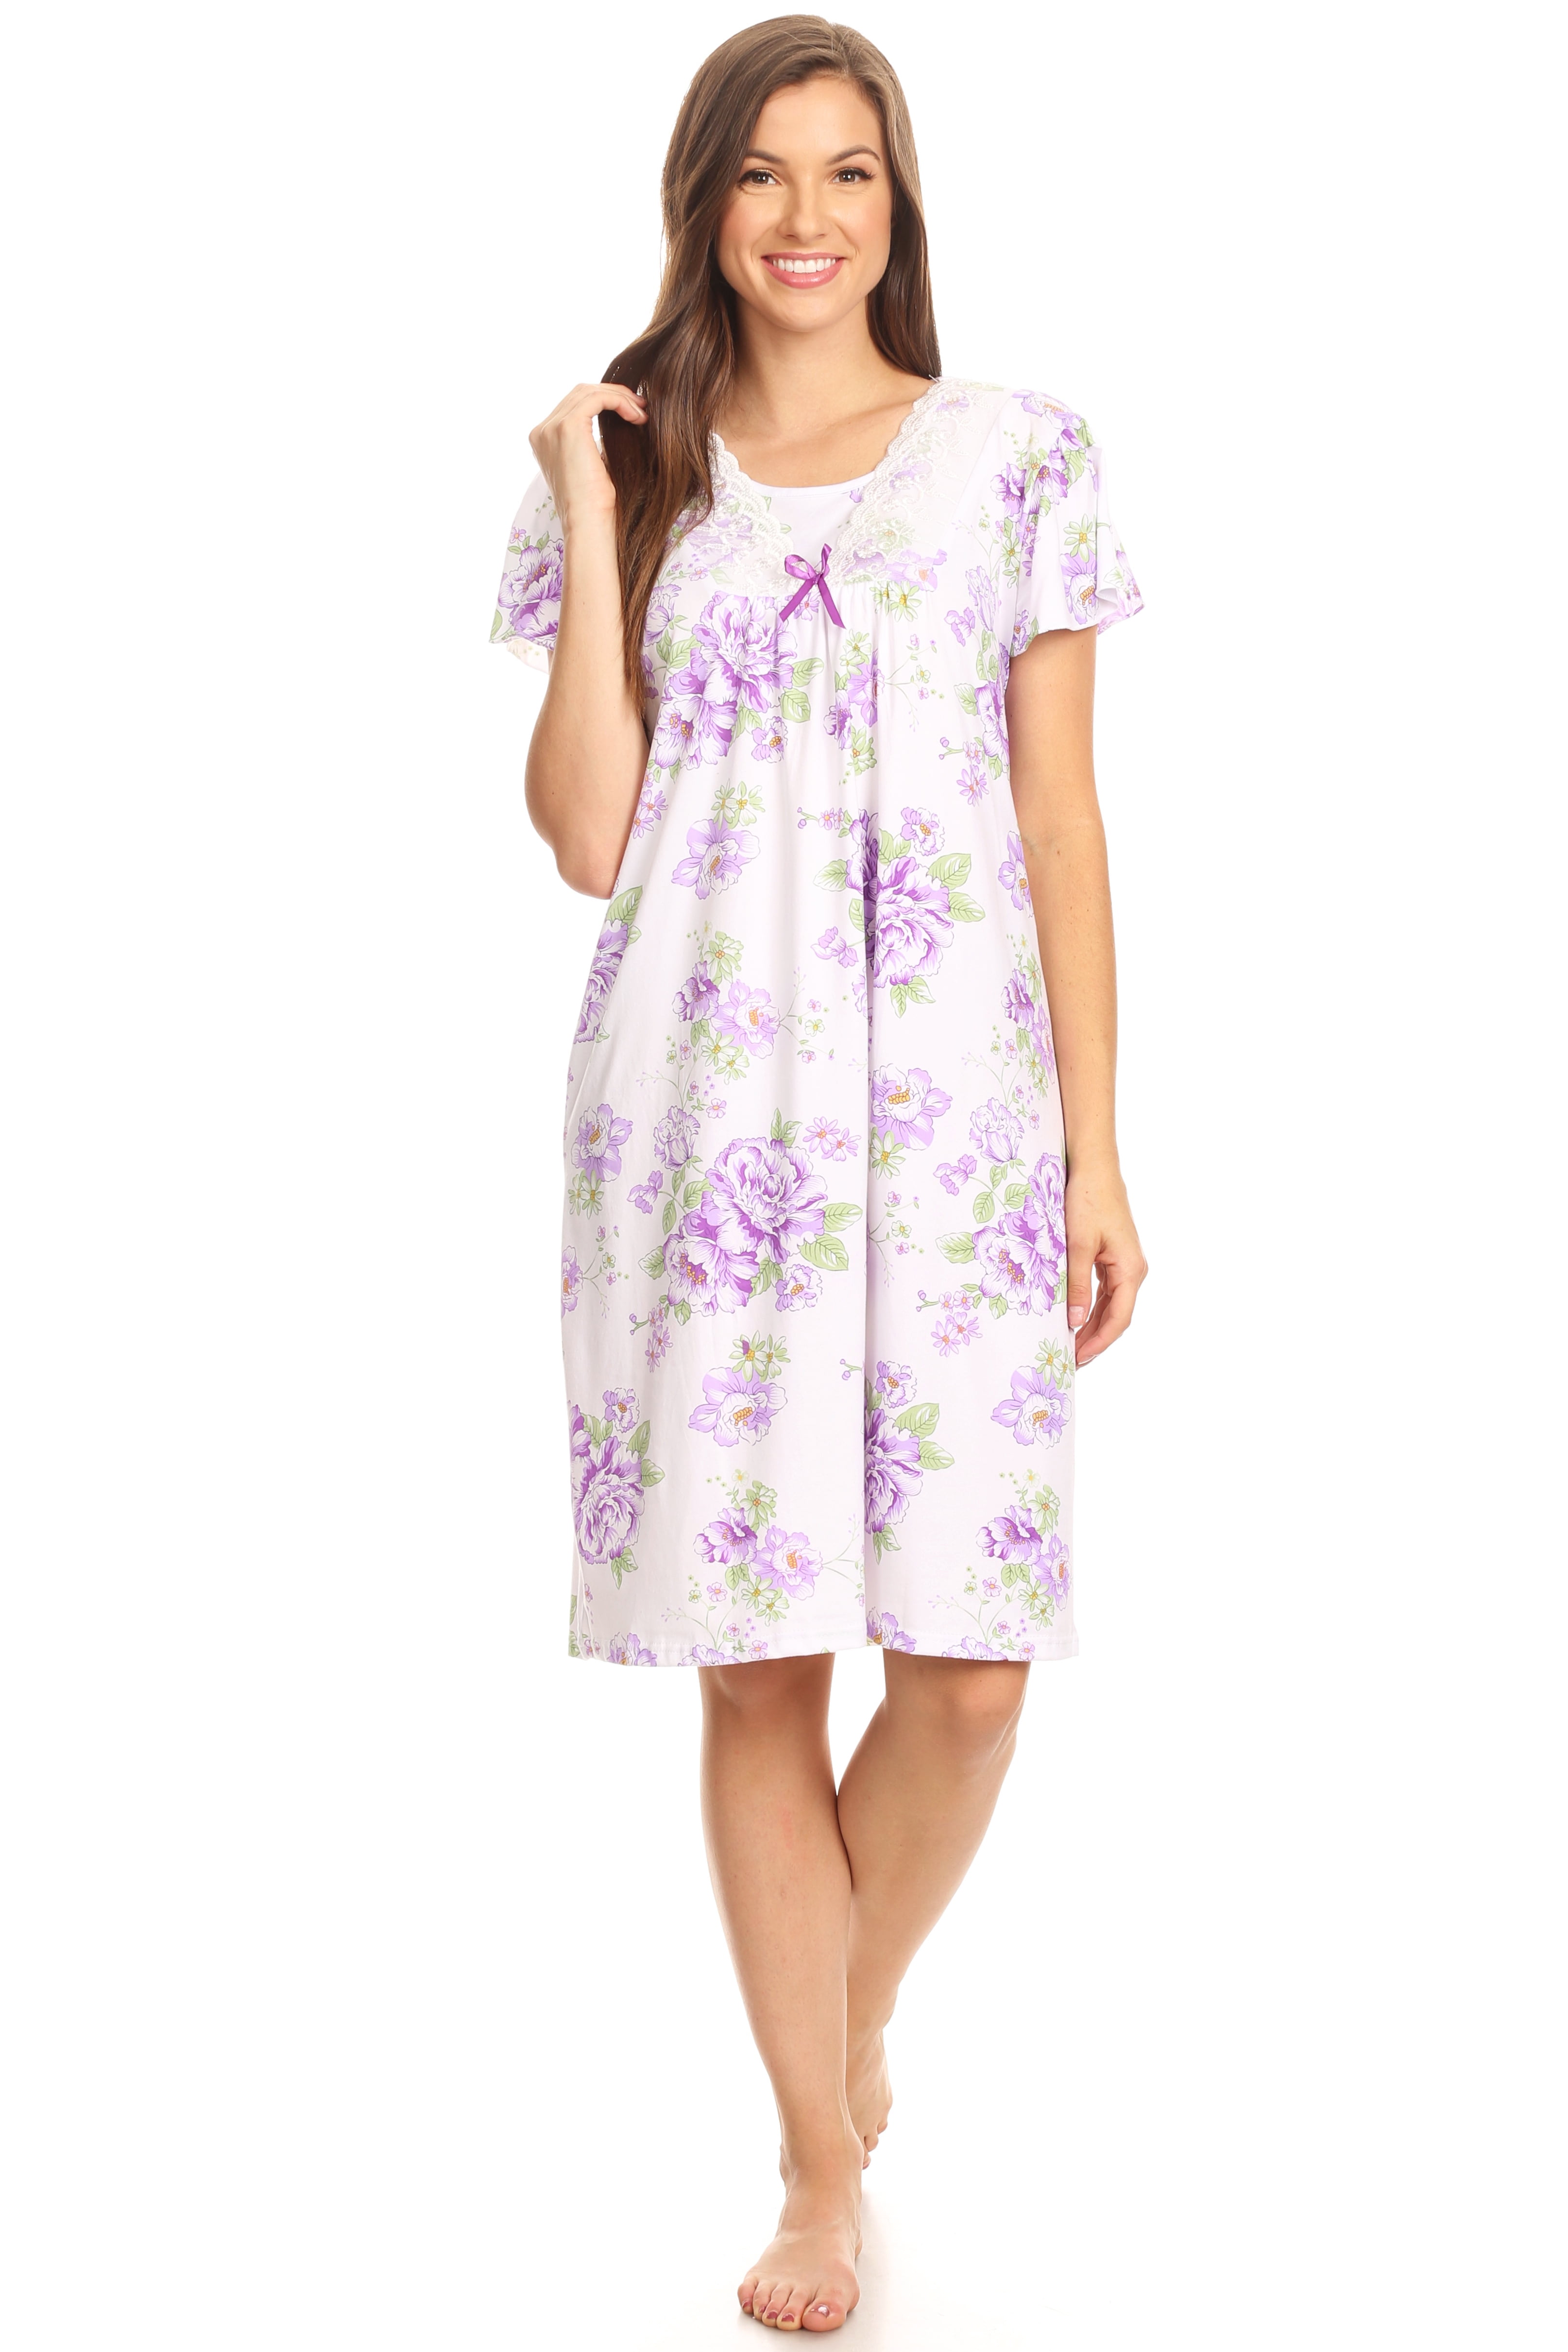 812 Womens Nightgown Sleepwear Pajamas Woman Short Sleeve Sleep Dress Nightshirt Purple 1X